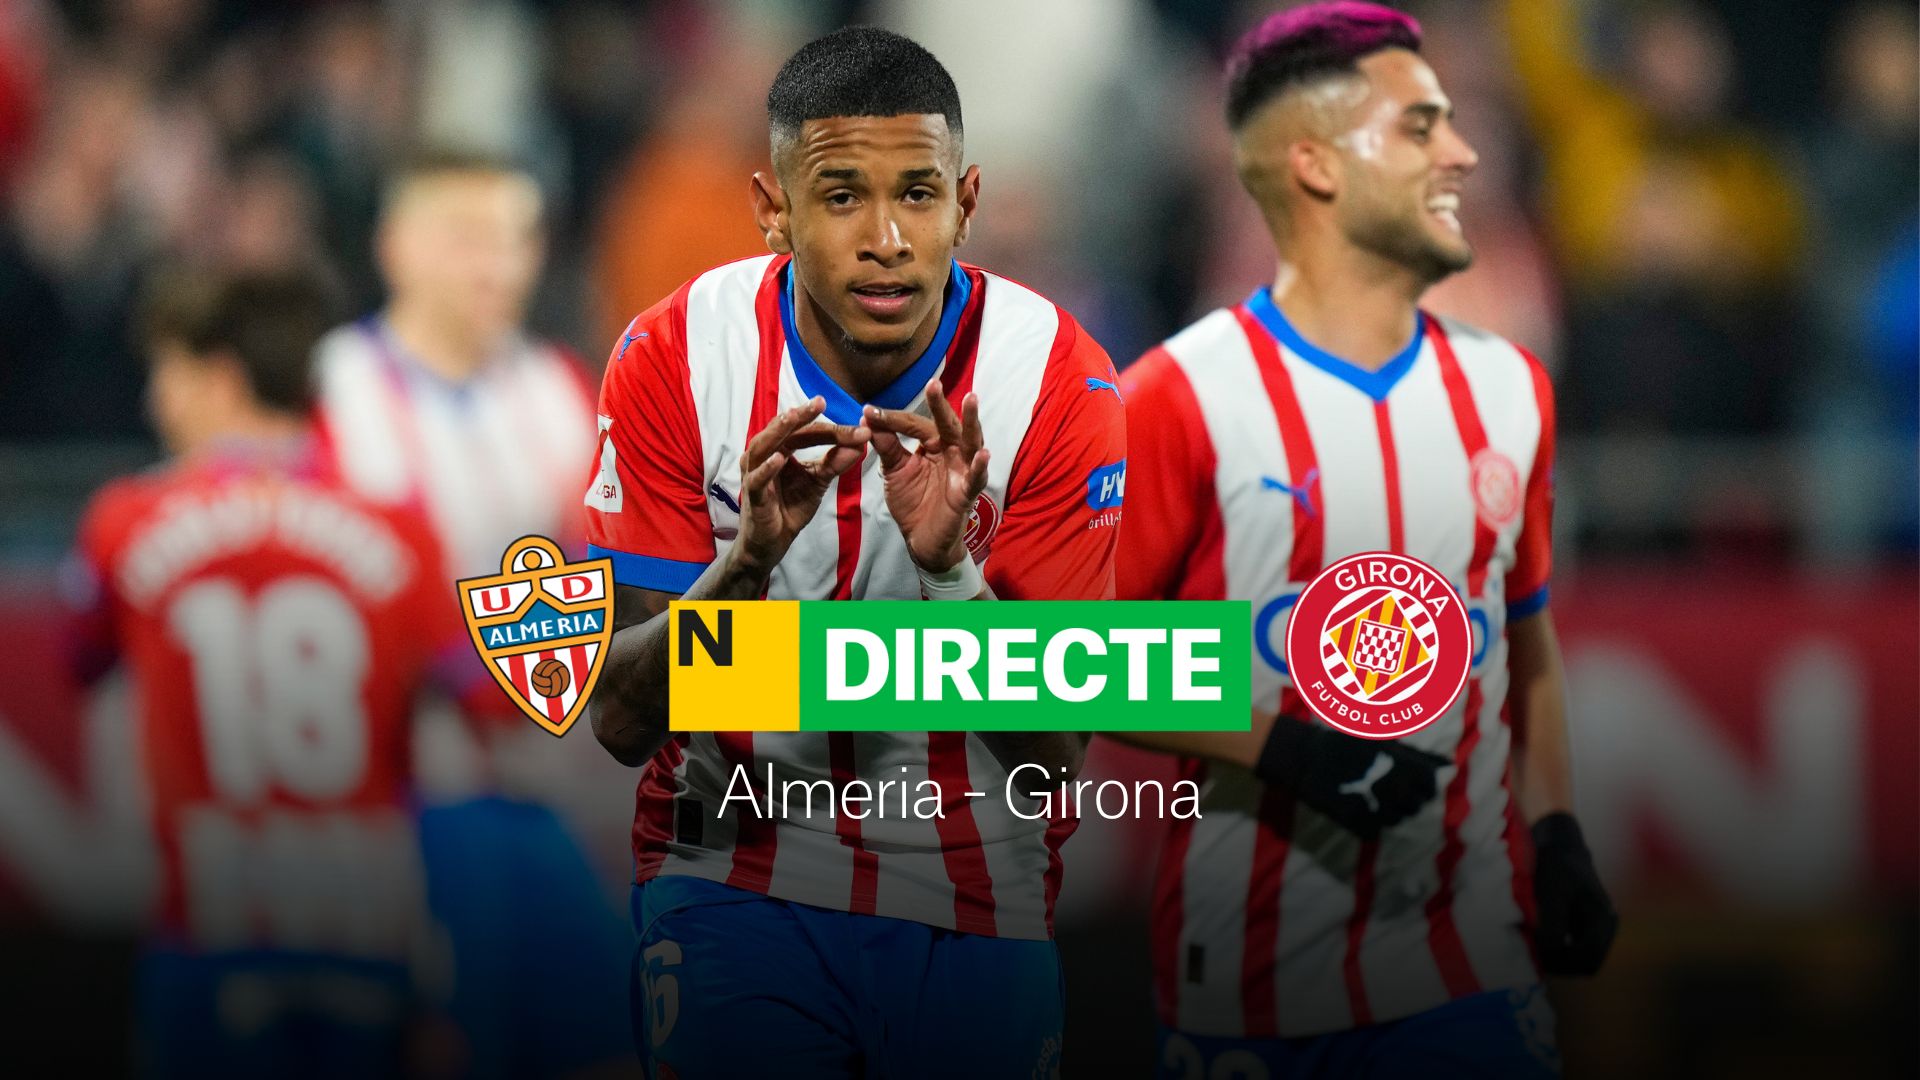 Almeria - Girona de LaLiga EA Sports, DIRECTE | Resultat, resum i gols